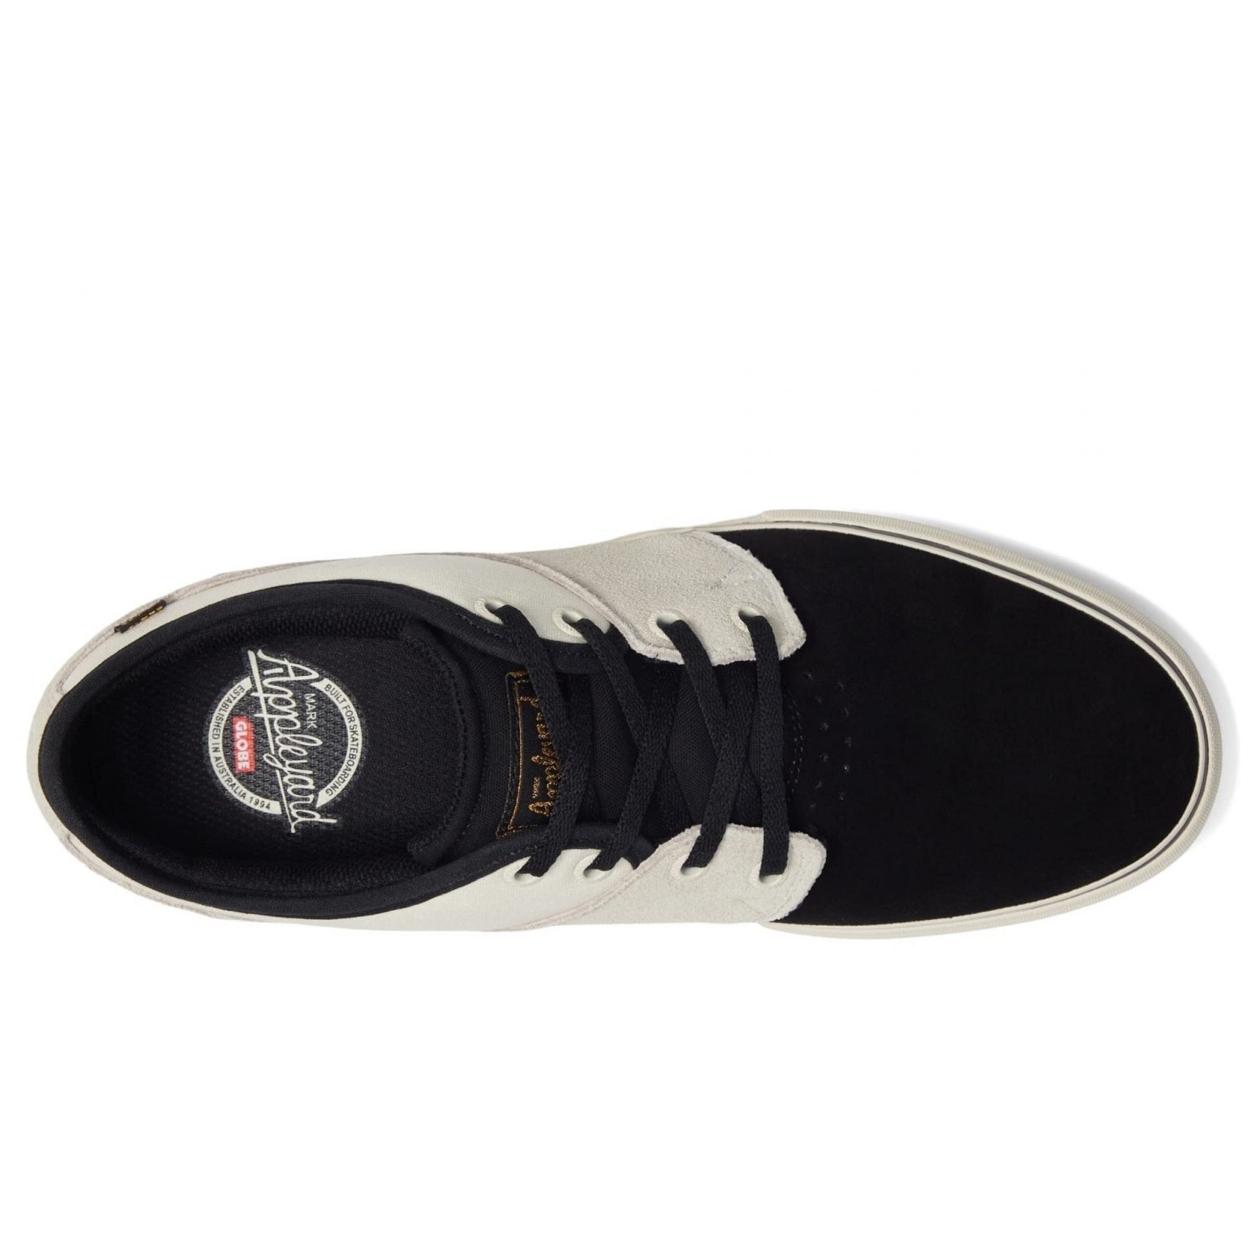 Globe Men's Mahalo Skate Shoe 14 BLACK/OFF WHITE - BLACK/OFF WHITE, 9.5